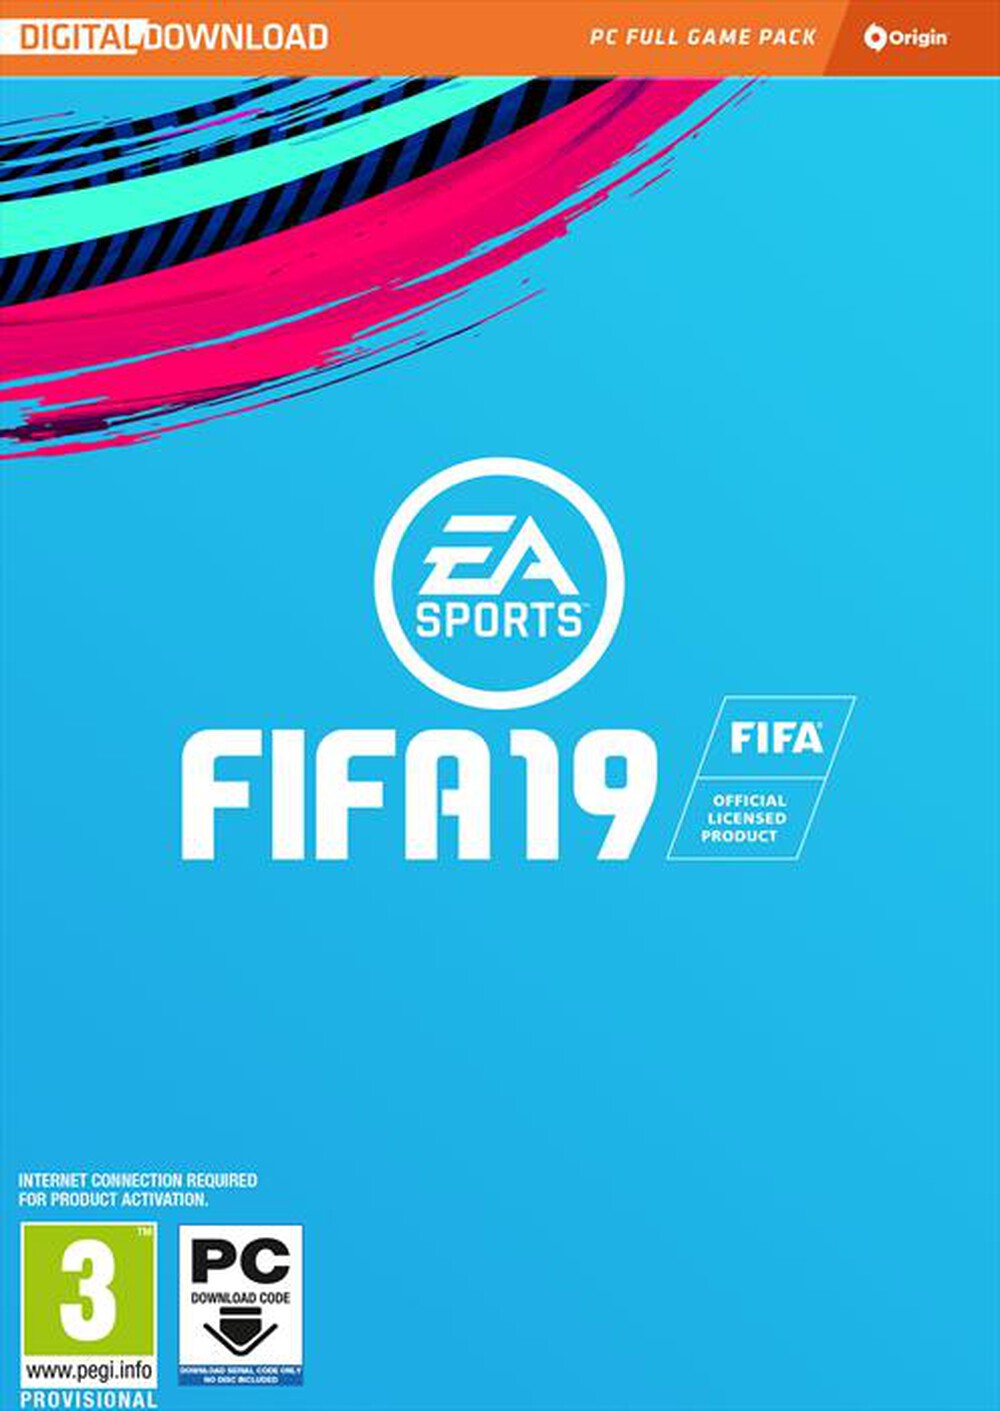 "ELECTRONIC ARTS - FIFA 19 PC - "